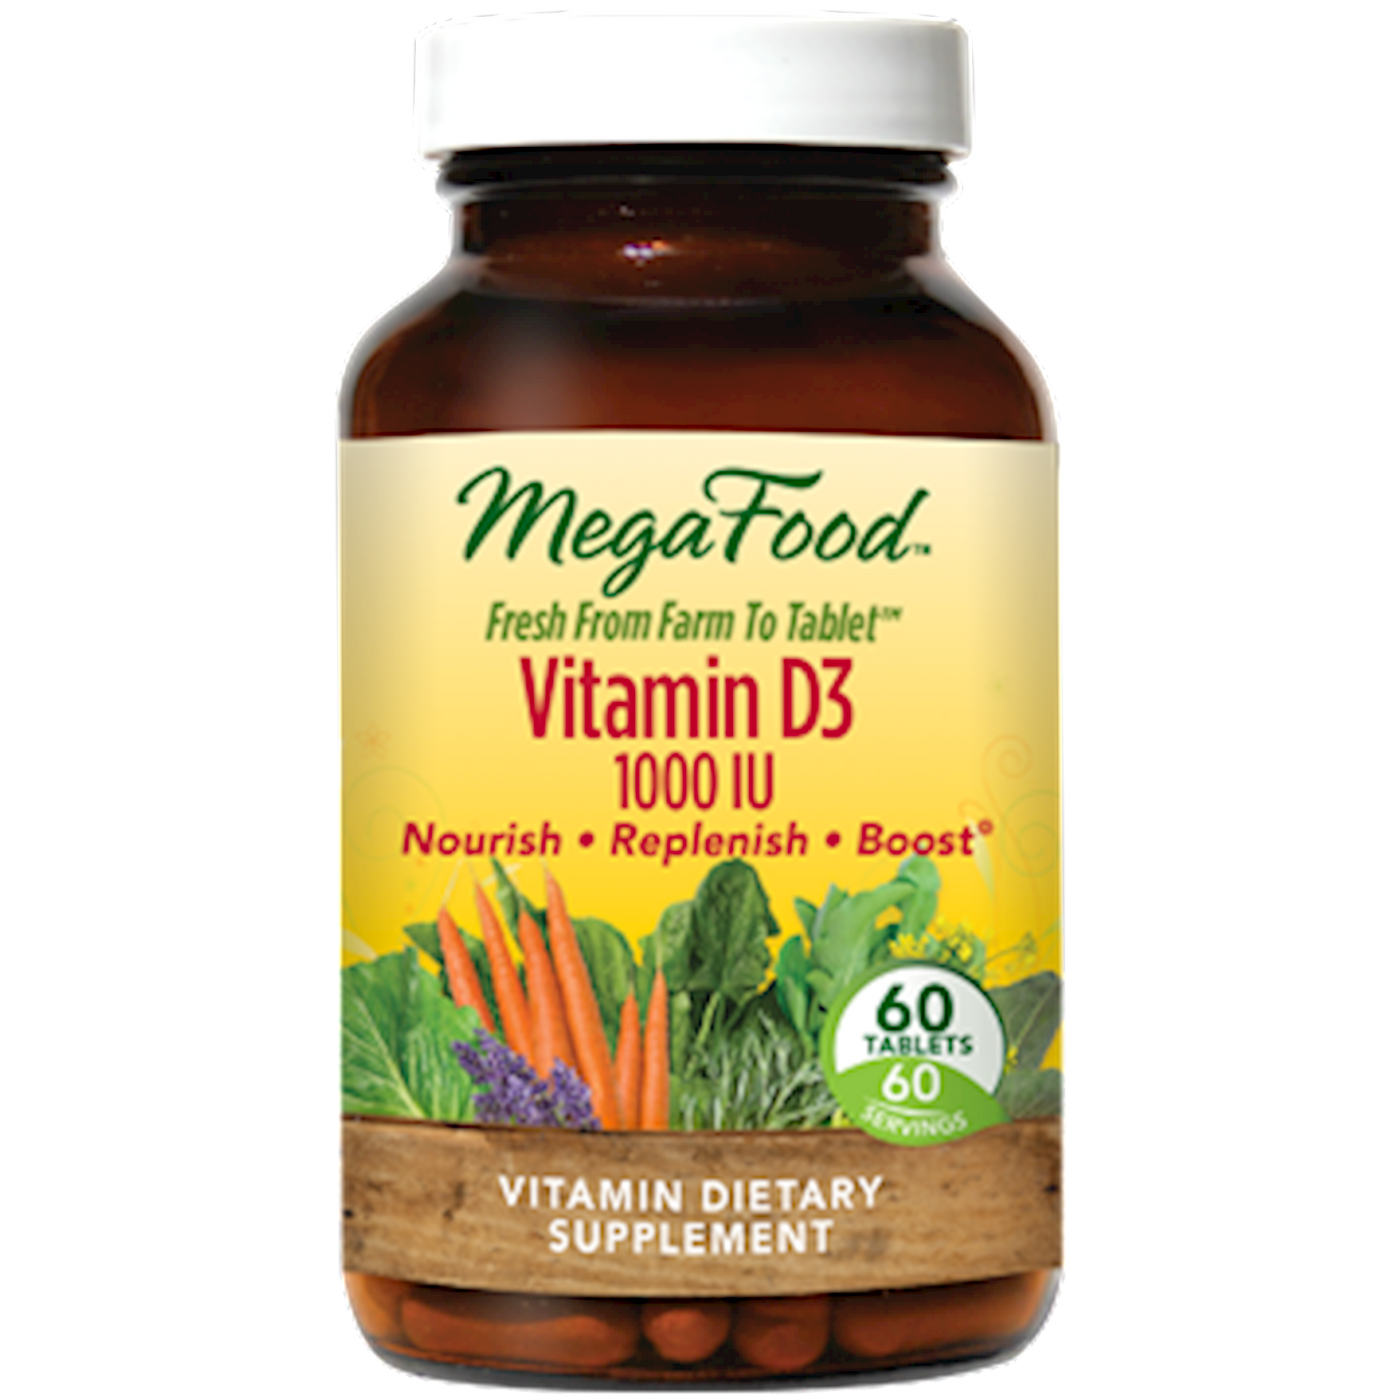 Vitamin D-3 1000 IU  Curated Wellness